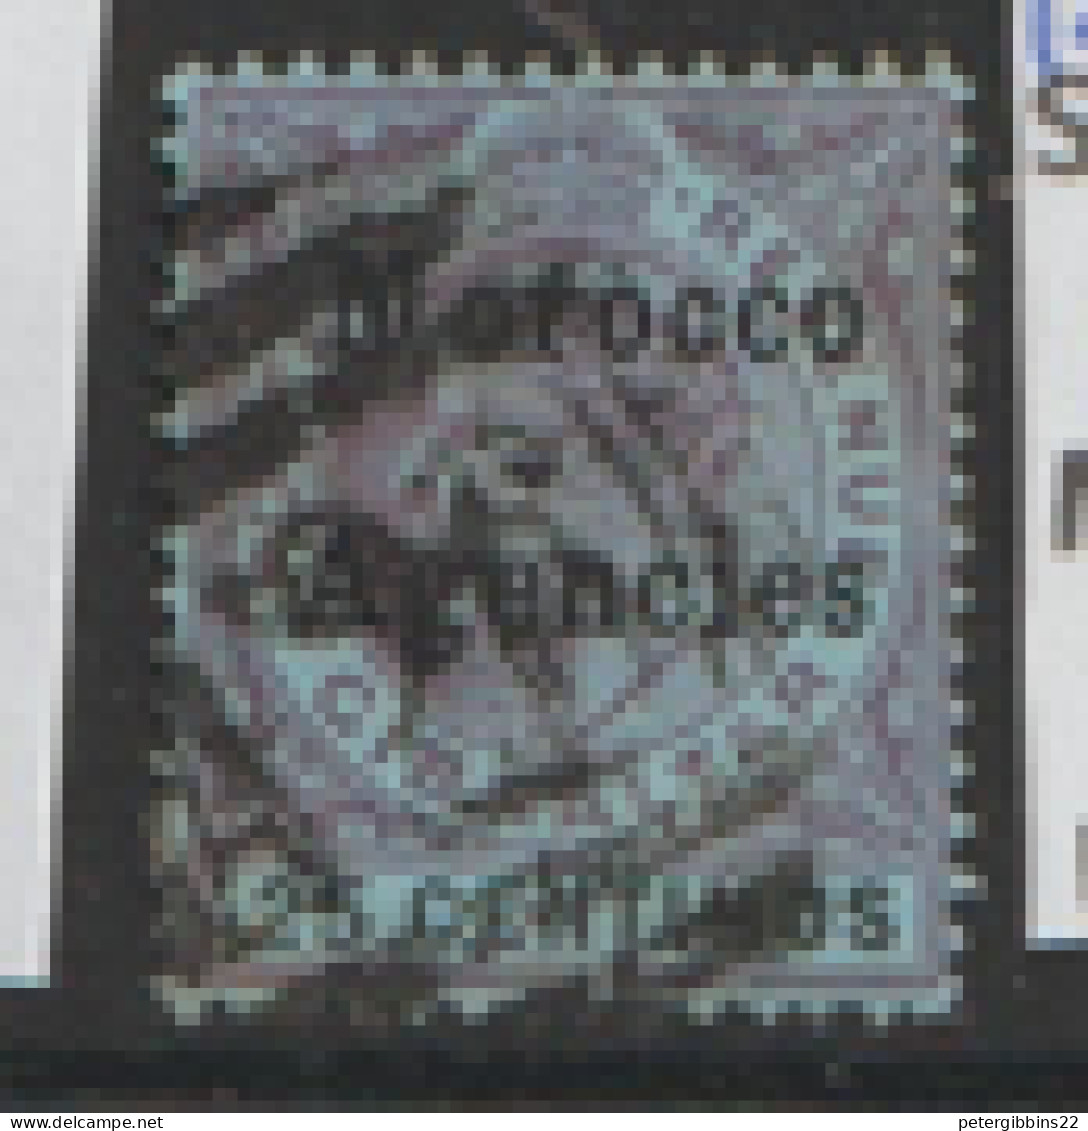 Morocco Agencies Gibraltar Issues  1899  SG 12  25c  Fine Used - Postämter In Marokko/Tanger (...-1958)